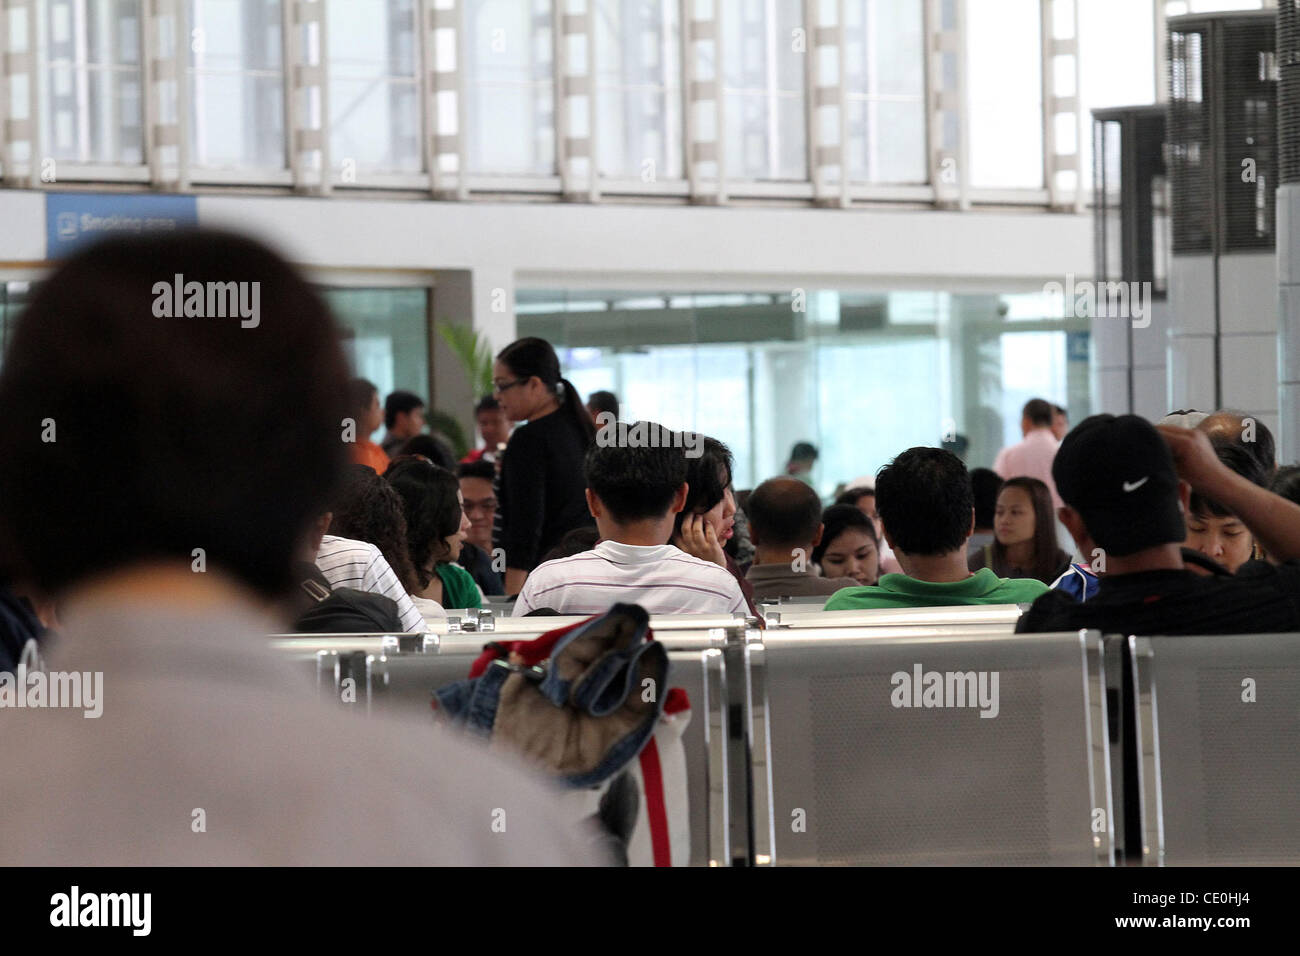 MANILA ‚Äì Passengers seen at the Ninoy Aquino International Airport in Manila, Philippines on Friday, August 19, 2011. Stock Photo